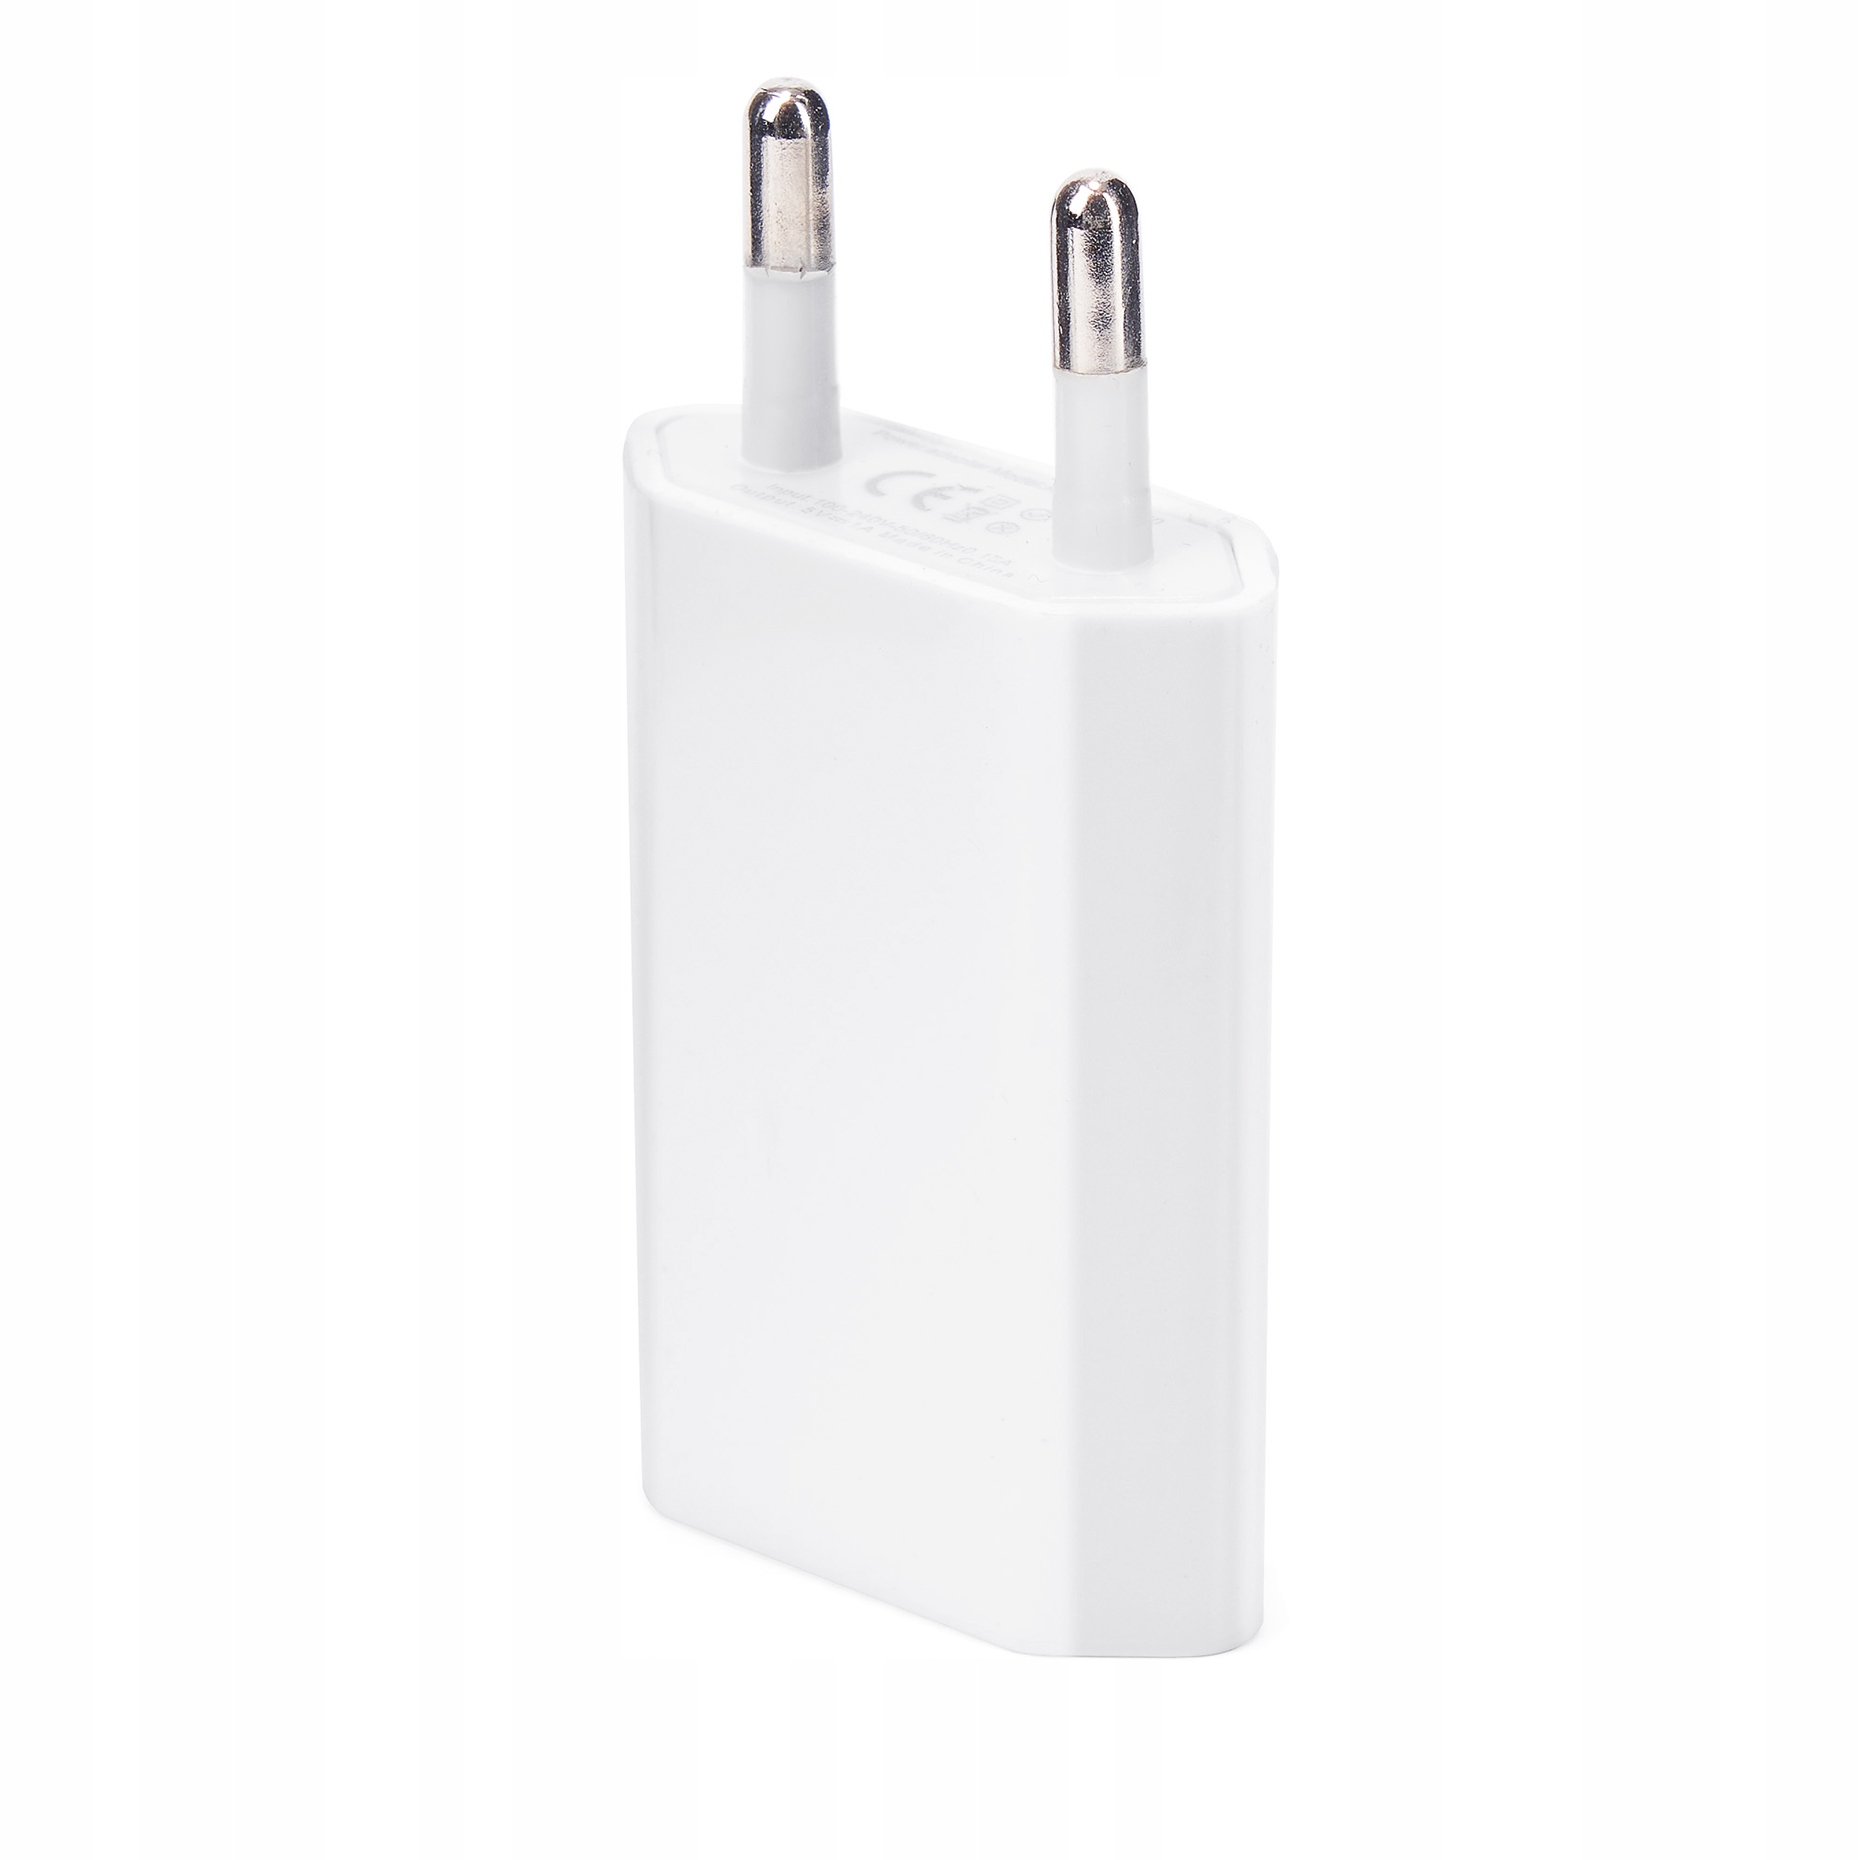 Купить зарядку эпл. Сетевая зарядка Apple md813zm/a. Сетевое зарядное устройство Apple md813zm/a белый. Адаптер питания Apple USB 5вт. СЗУ USB Apple 5w.